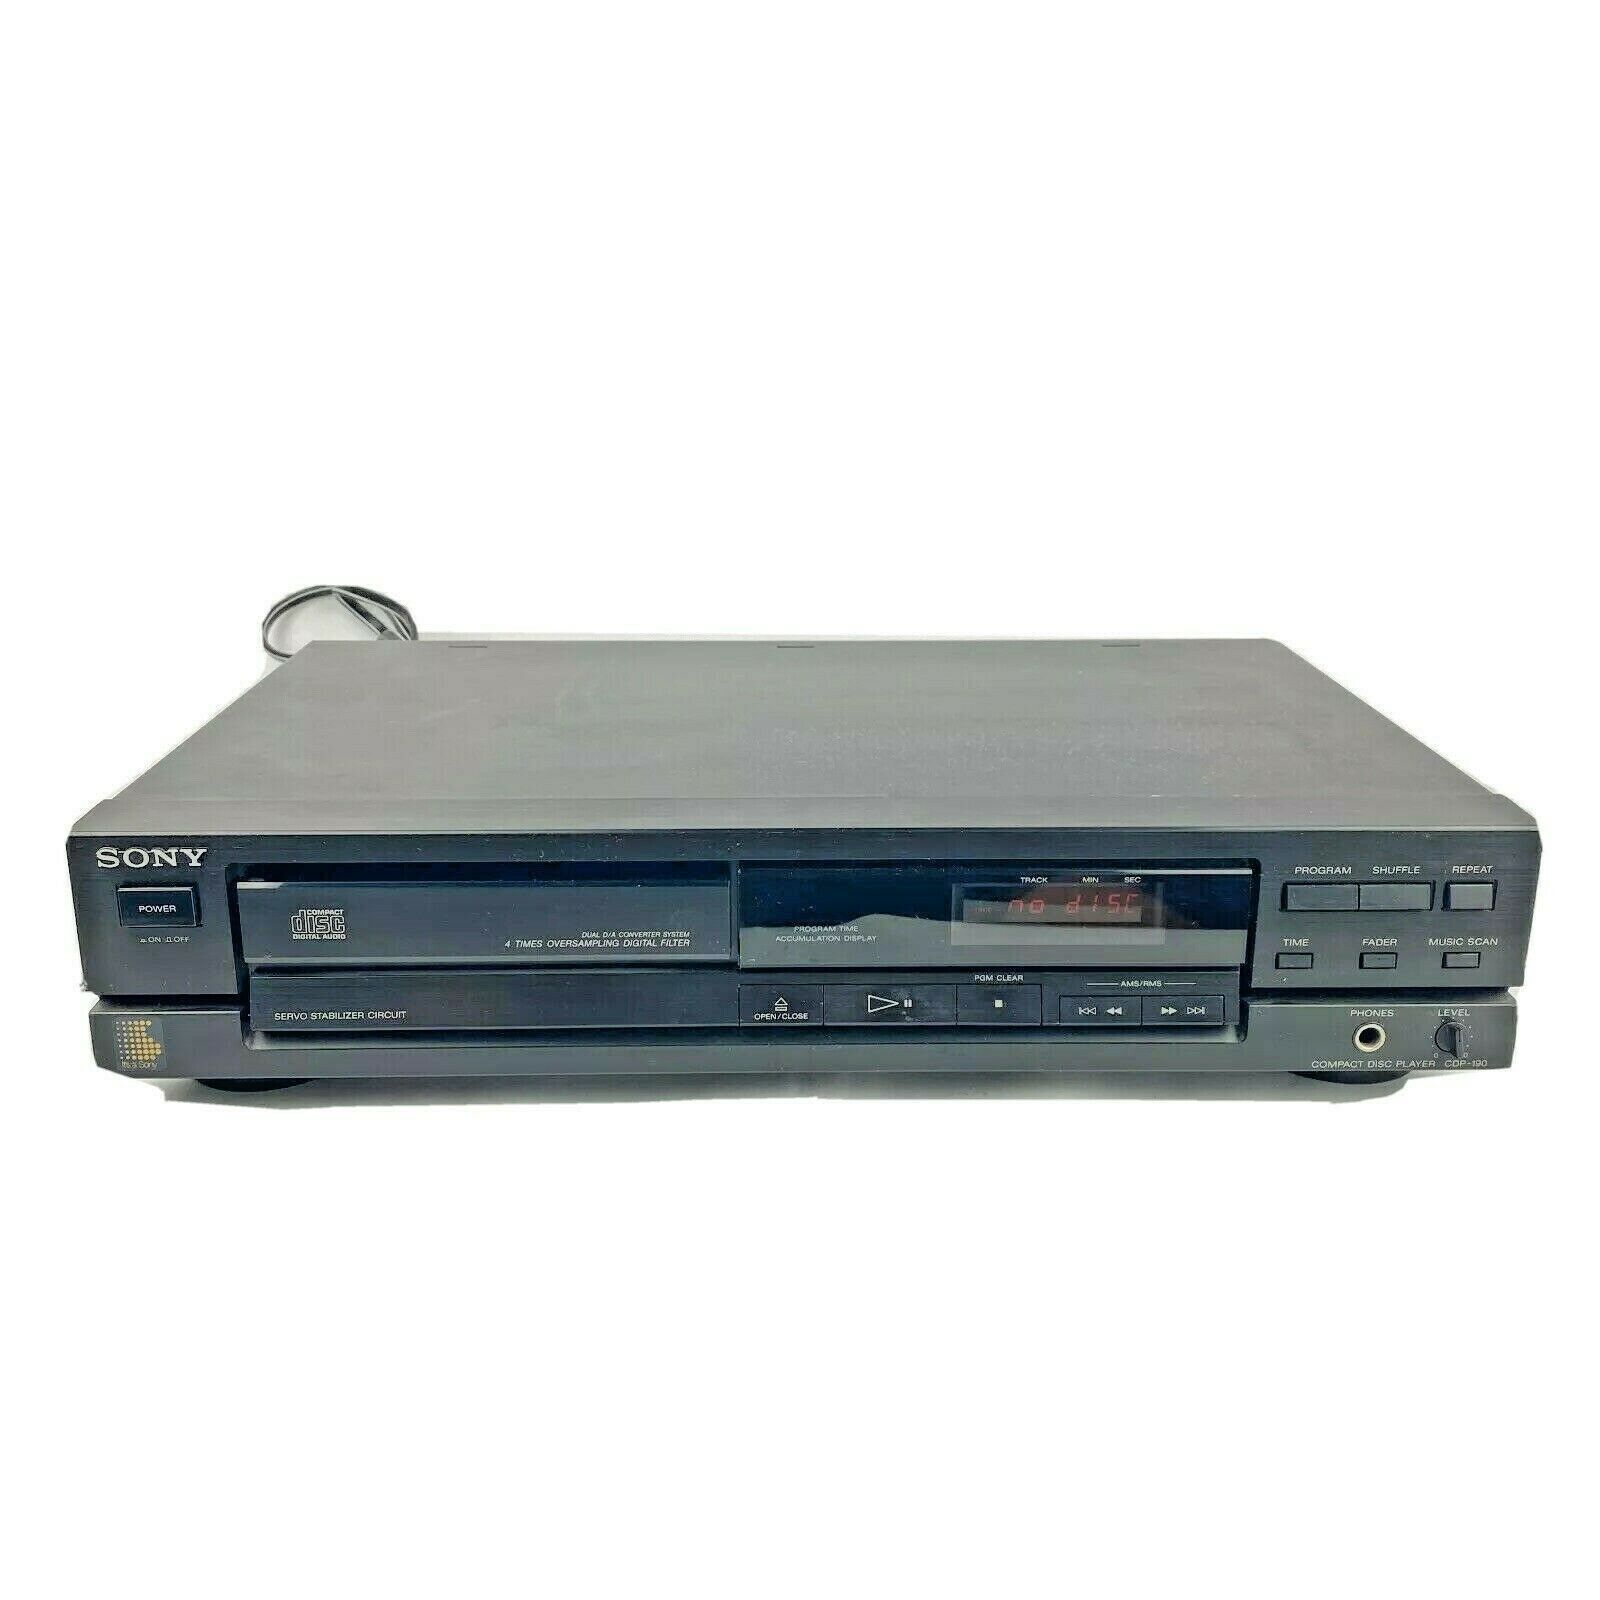 Used Sony CDP-190 CD players for Sale | HifiShark.com